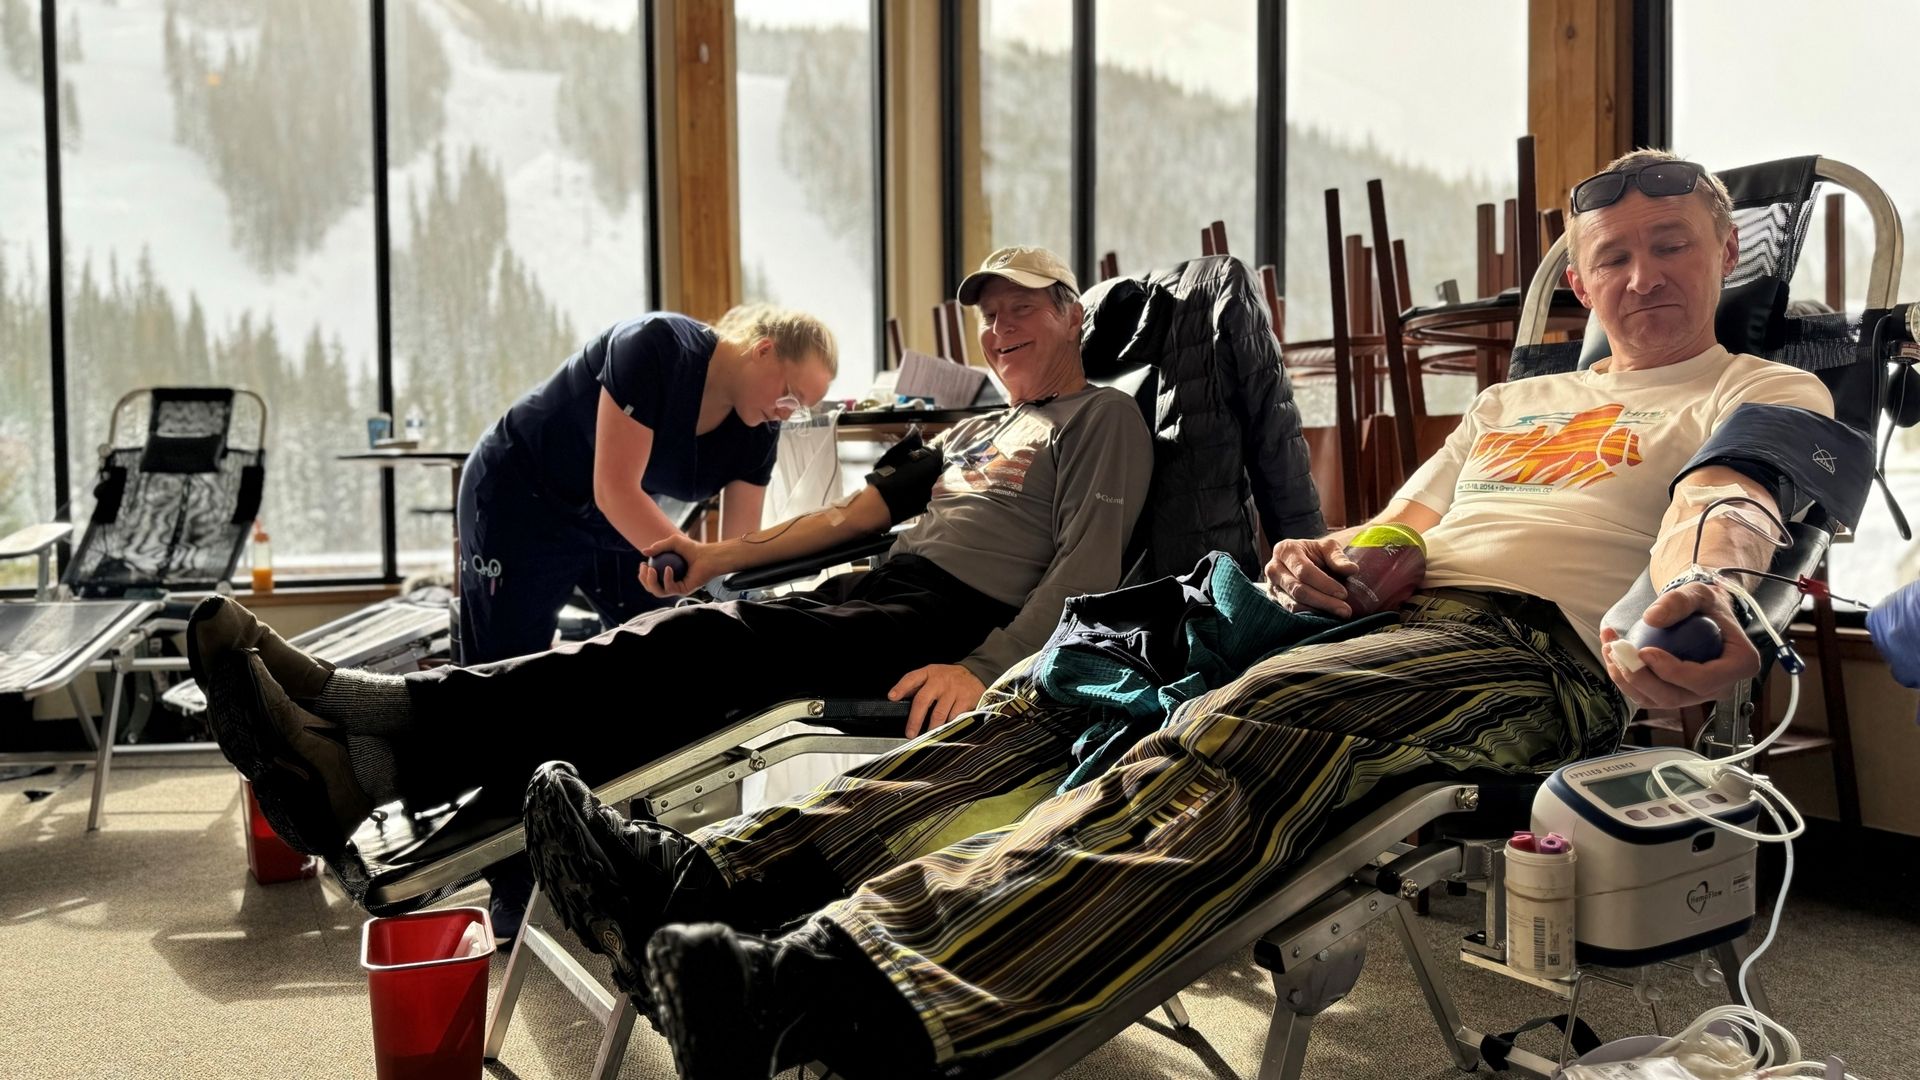 ¿Cambiarías un forfait de esquí por sangre? En Loveland Ski Area lo hacen